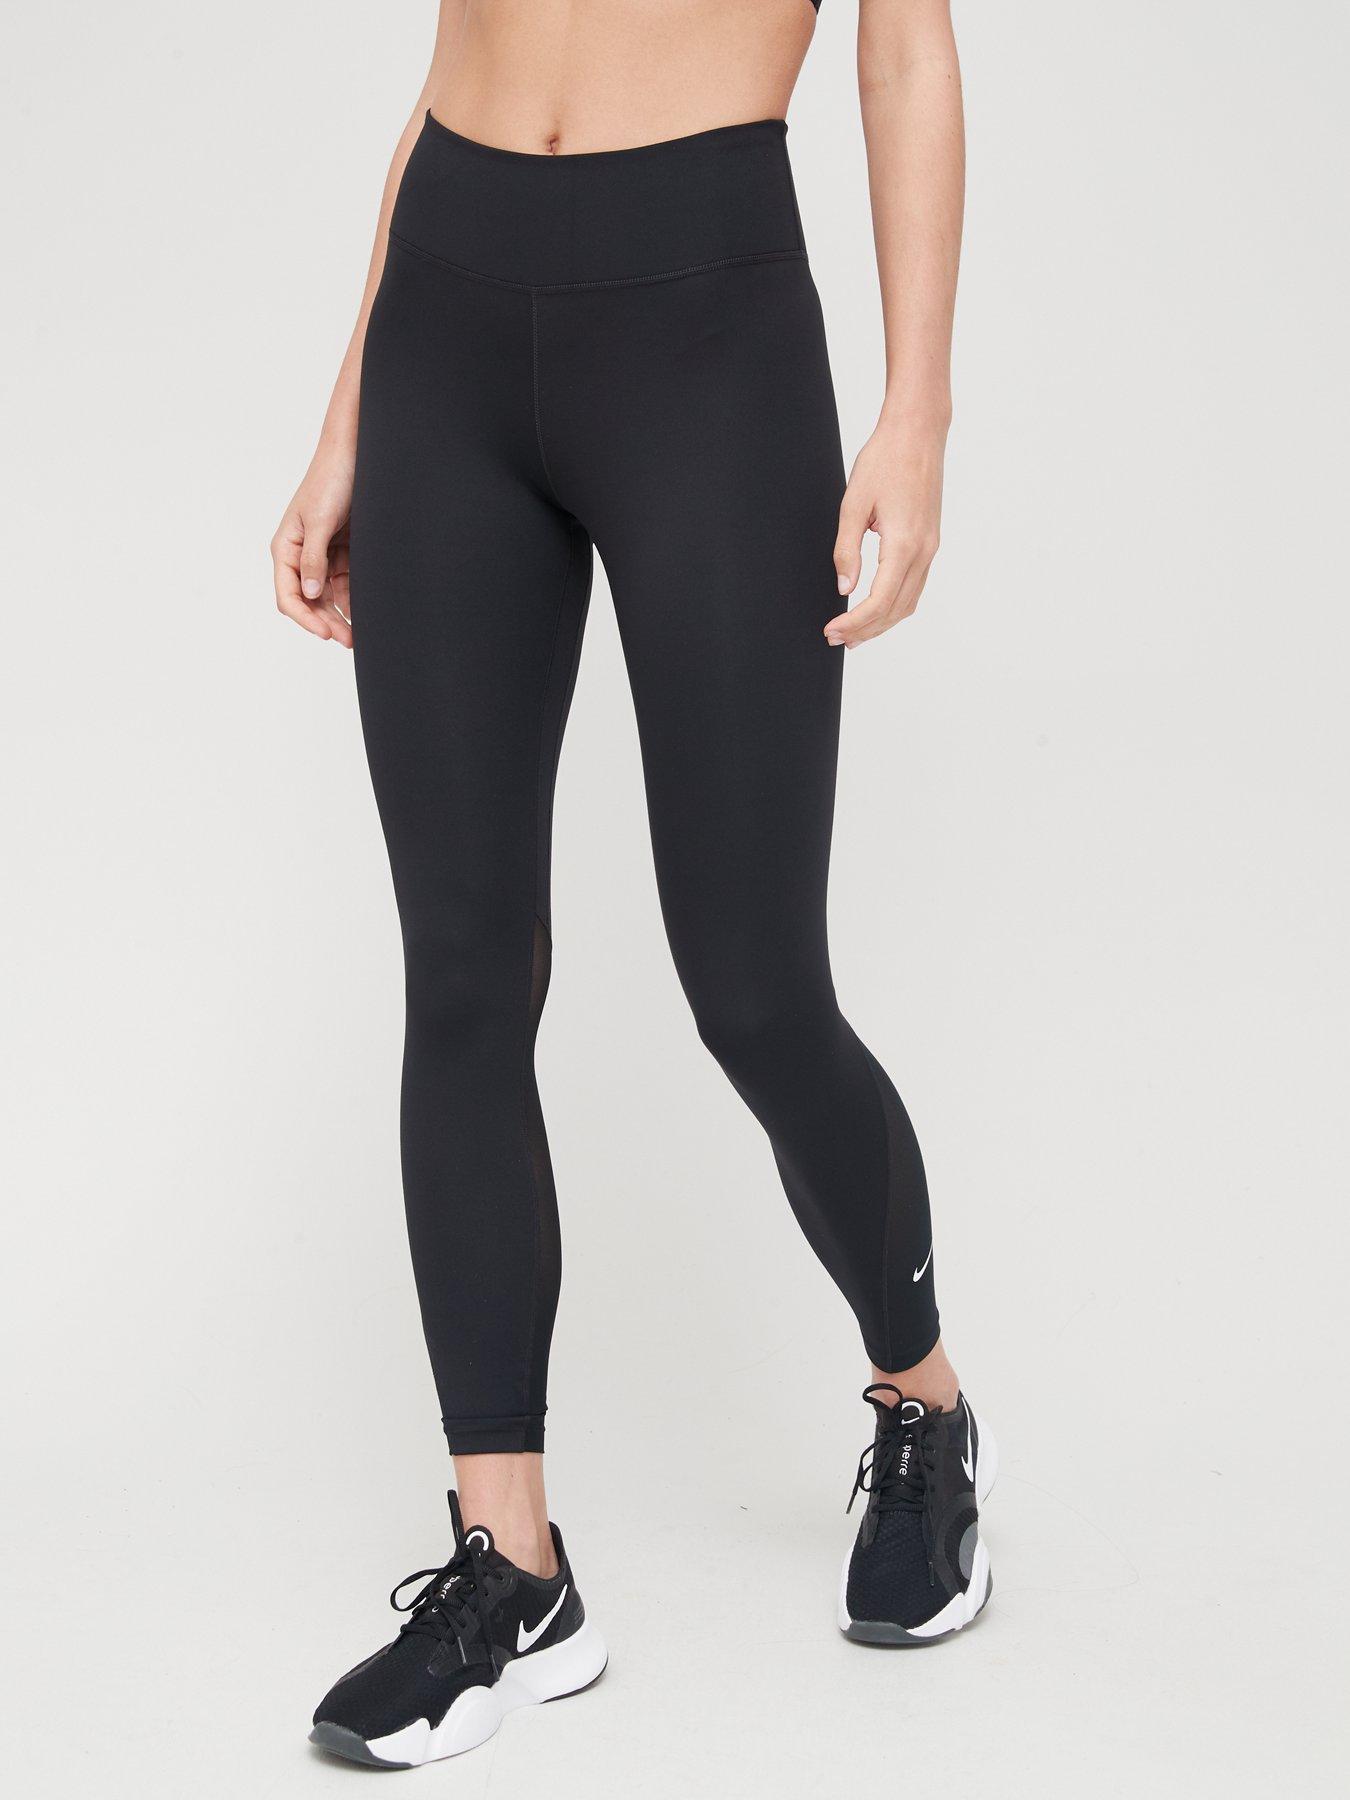 Nike One Training novelty dri fit high rise 7/8 leggings in black